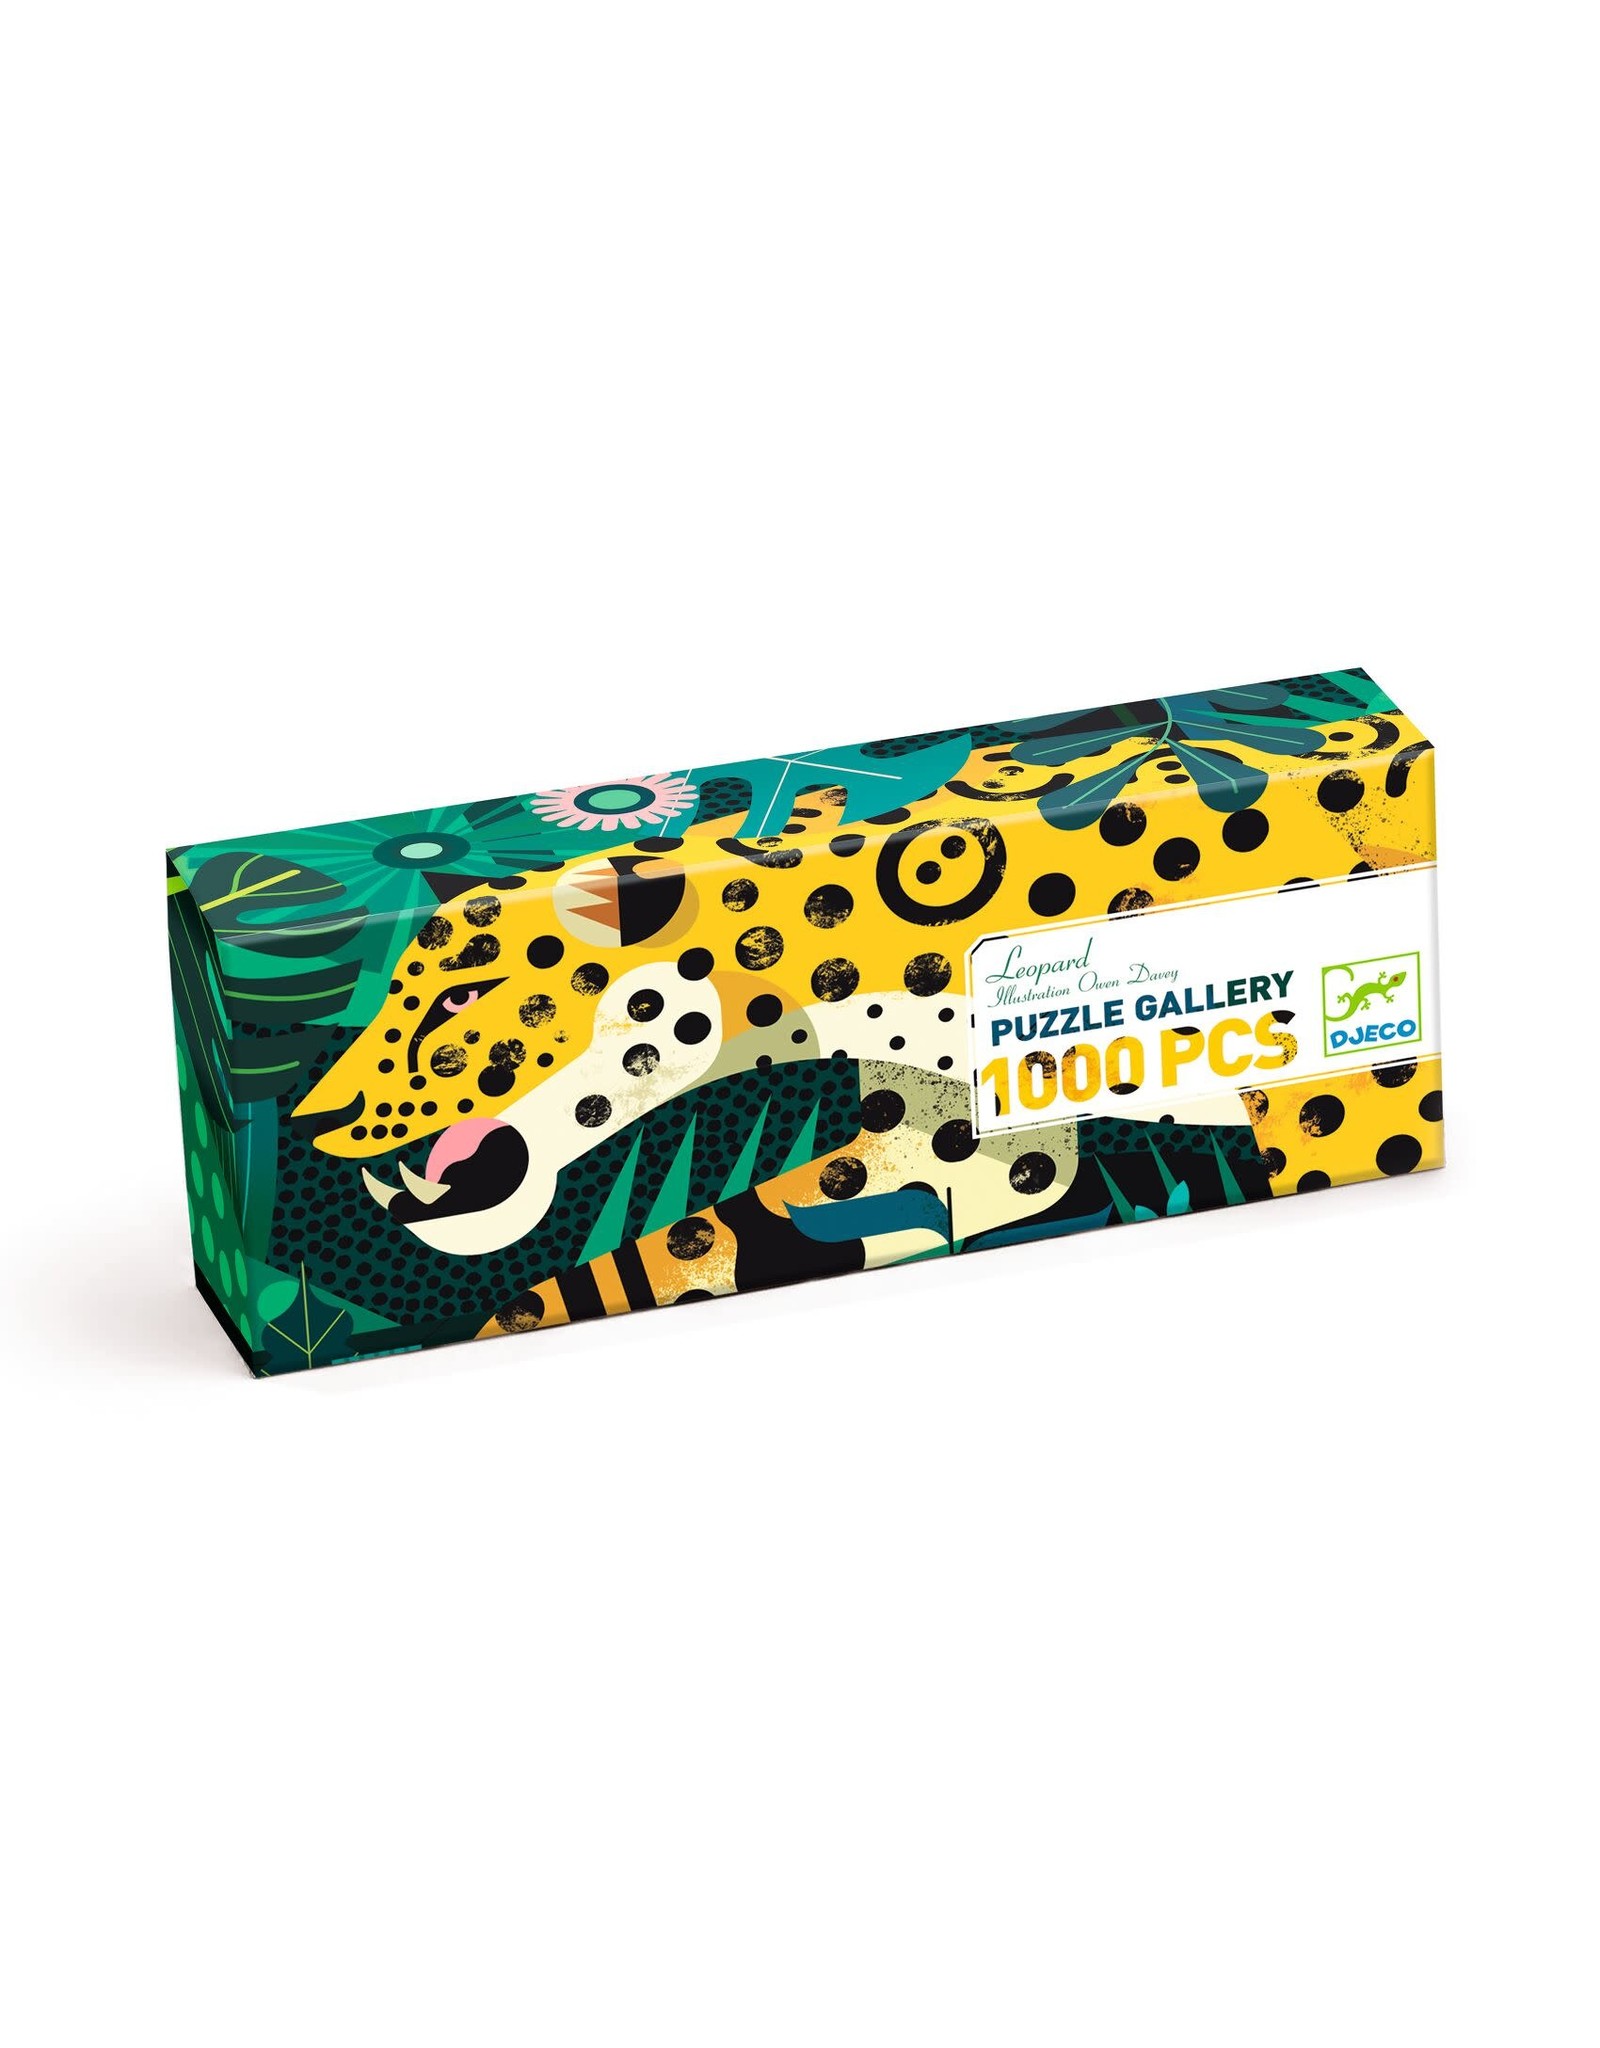 Djeco Leopard 1000 Piece Gallery Puzzle